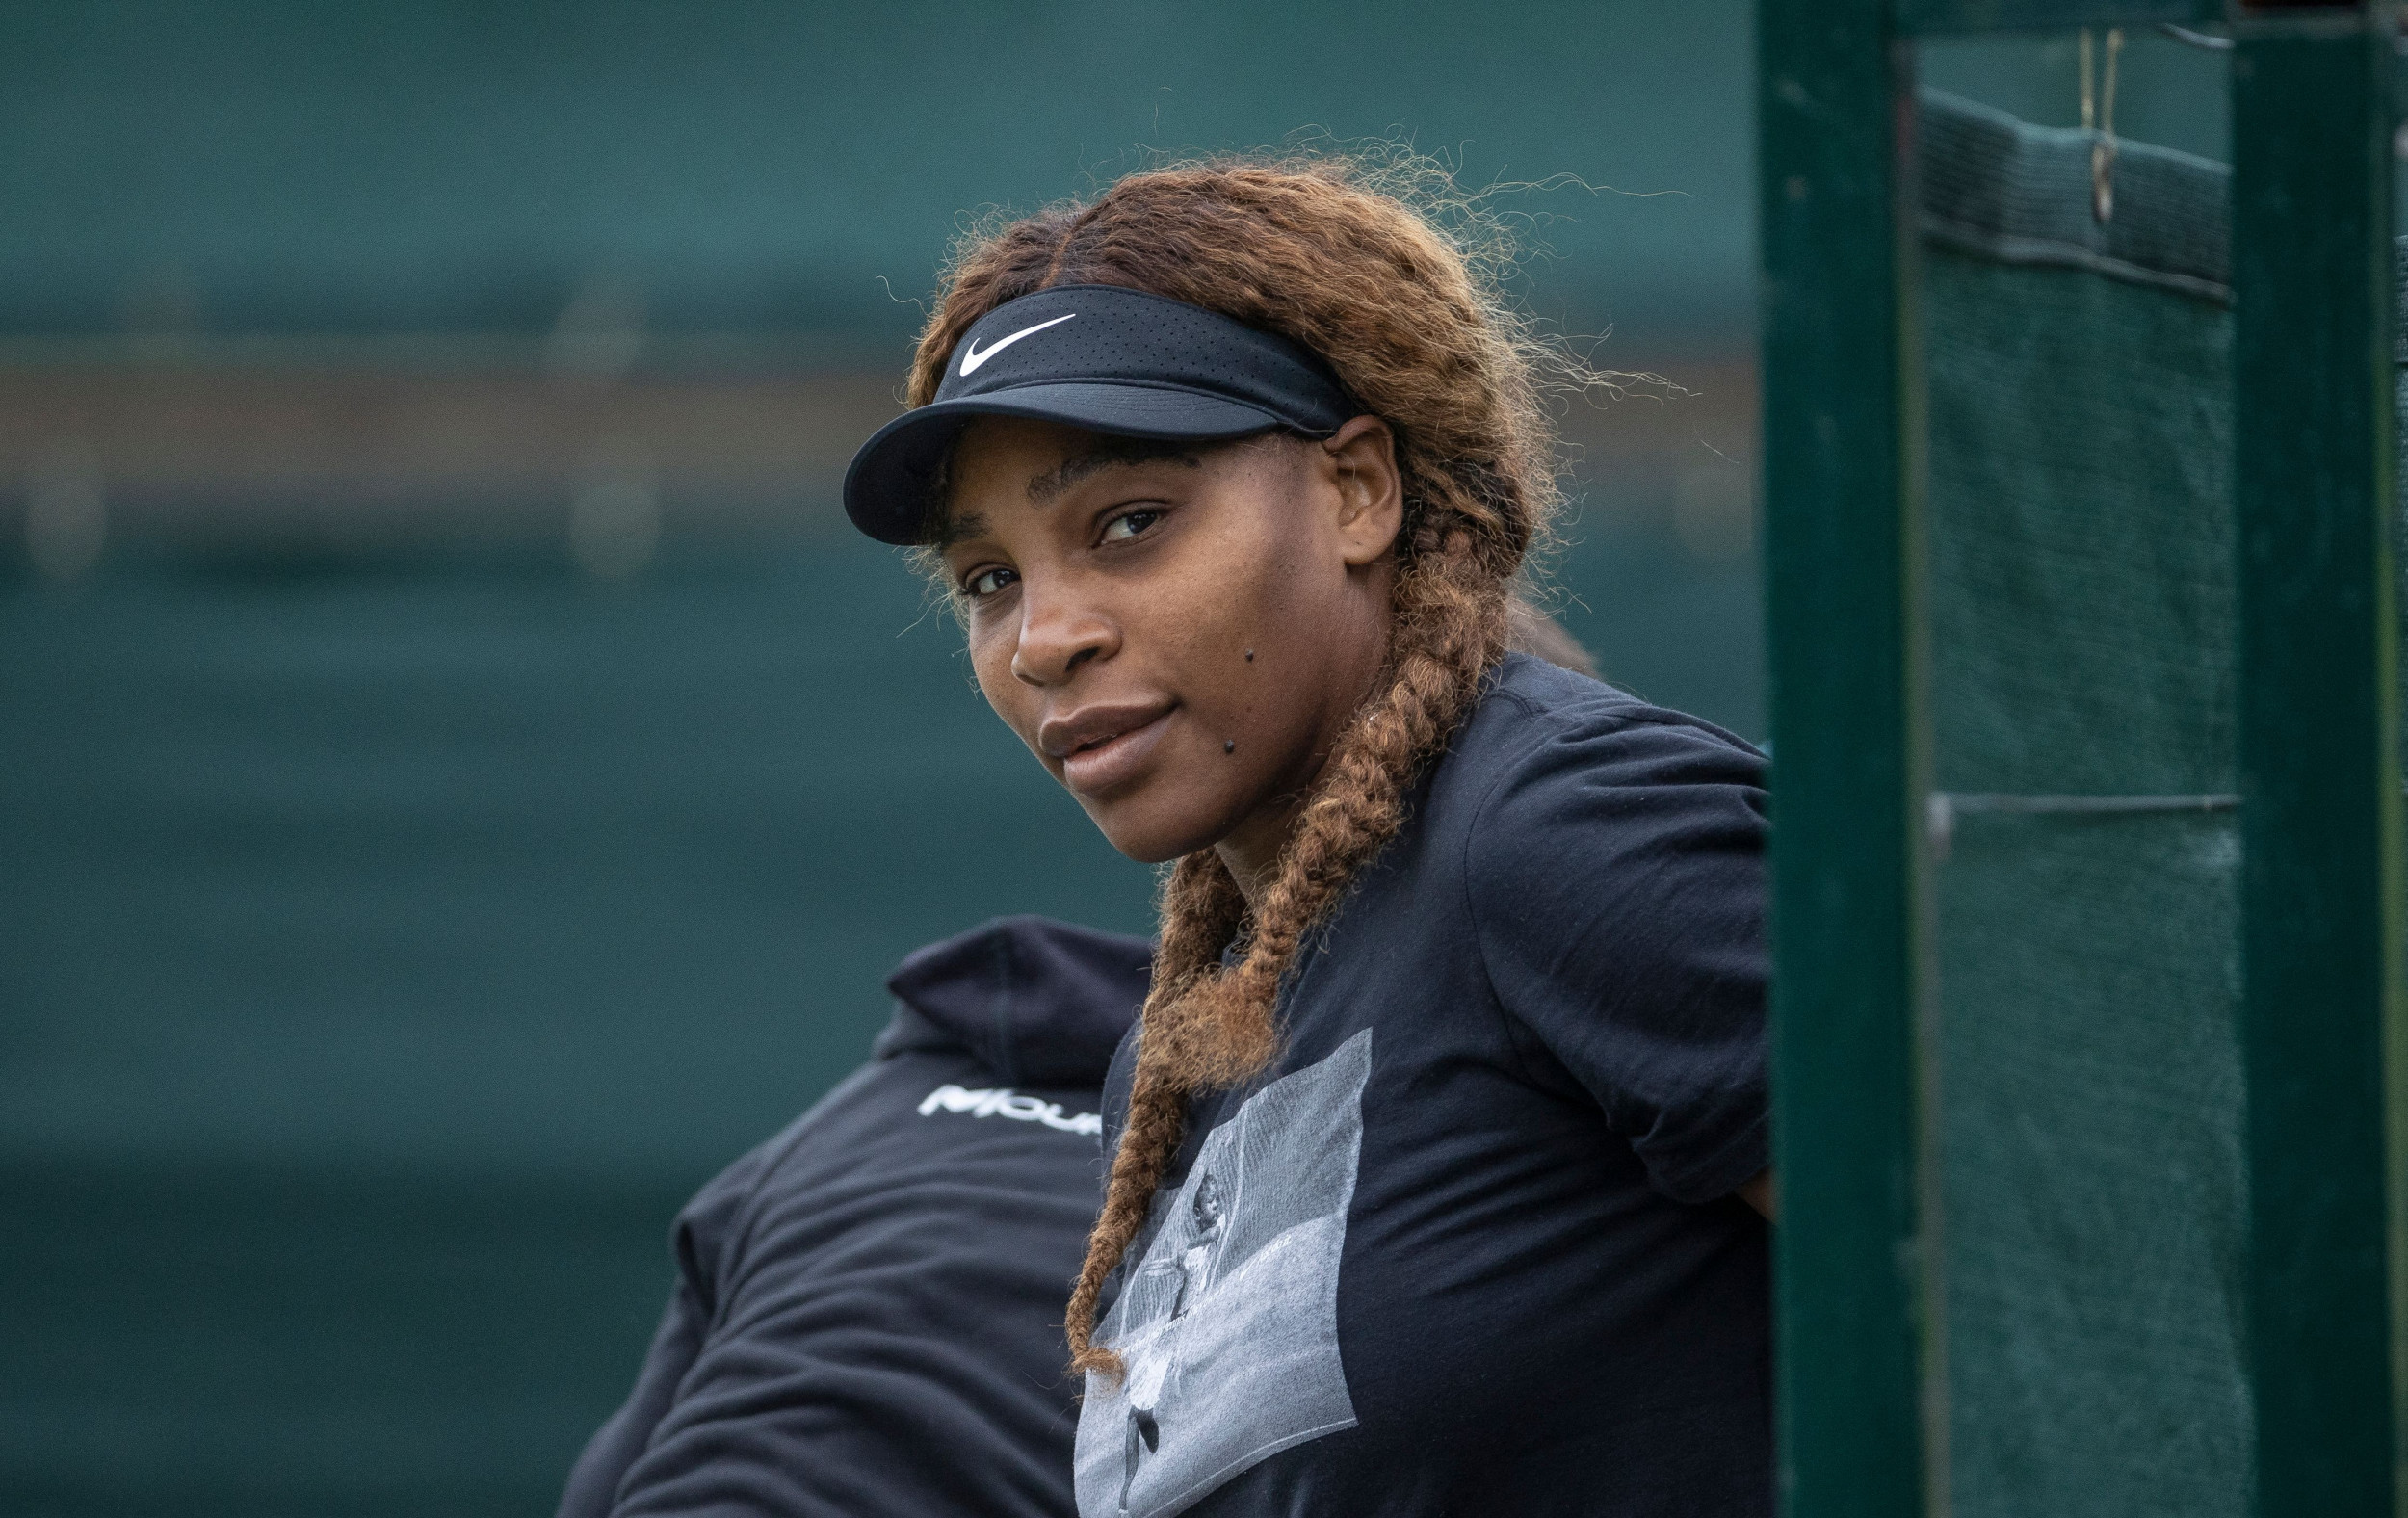 Wimbledon 2021 How to Watch Serena Williams, Coco Gauff First Round Matches, Live Stream